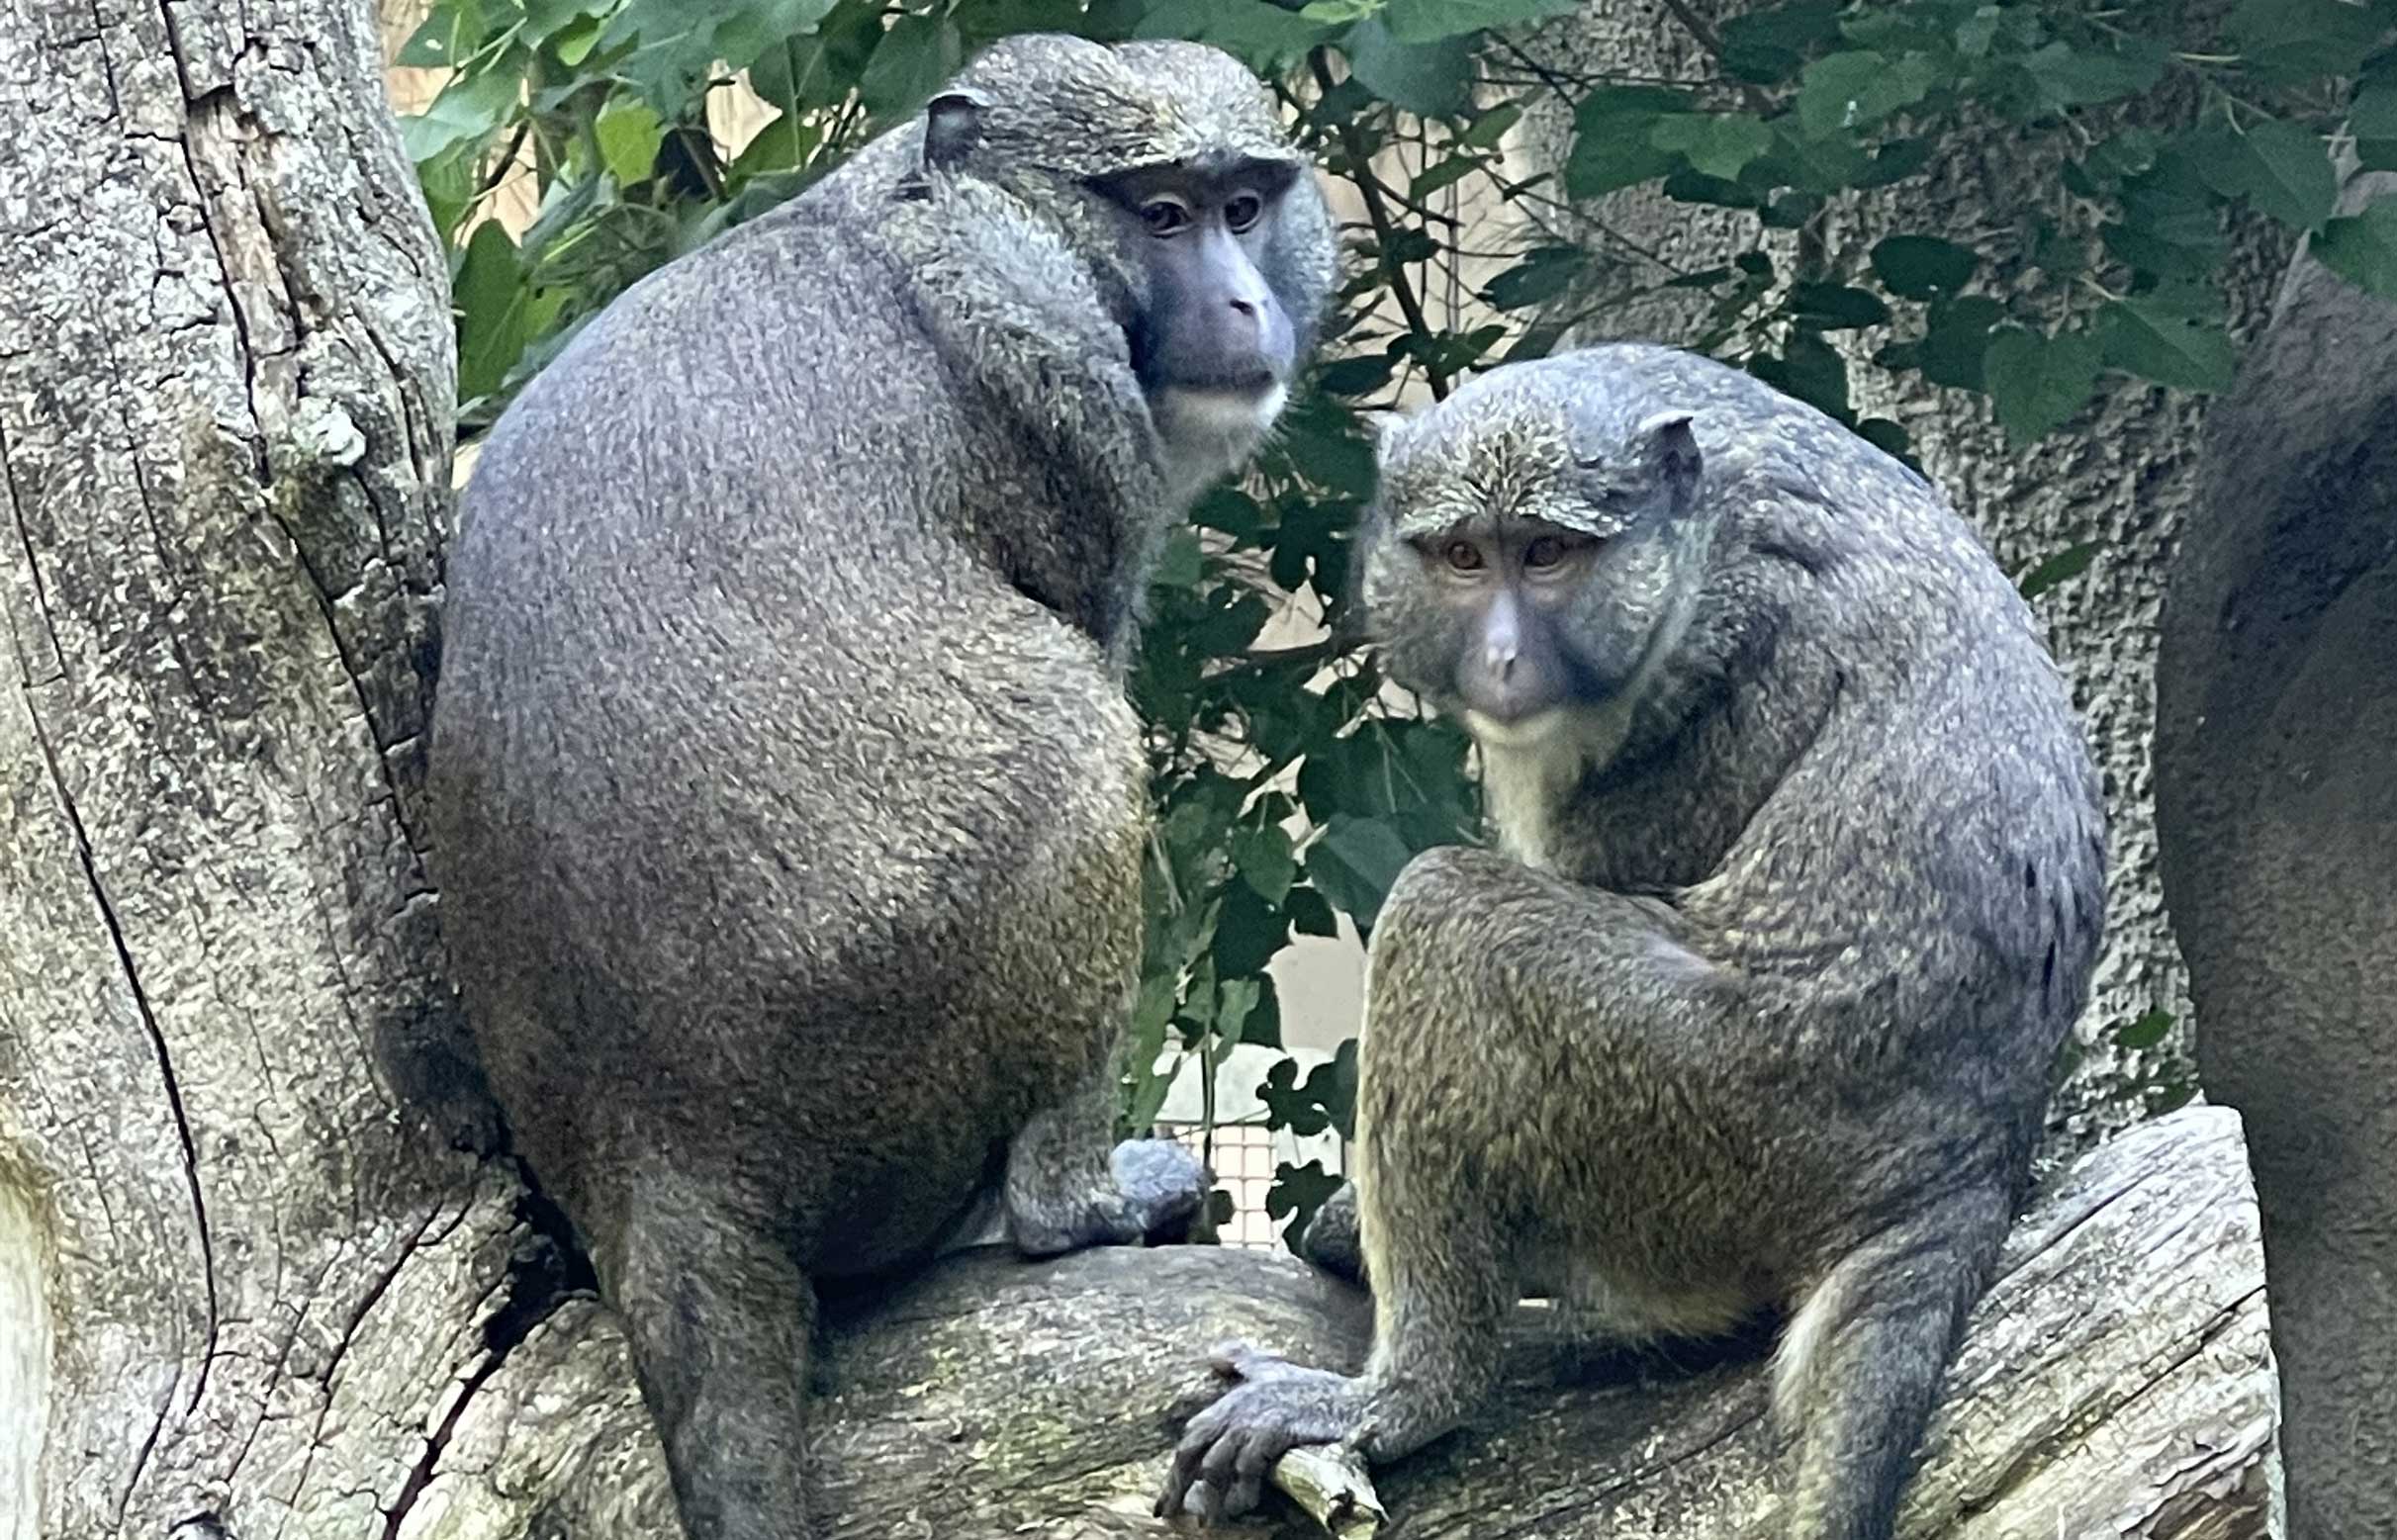 Allen's Swamp Monkeys - Detroit Zoo